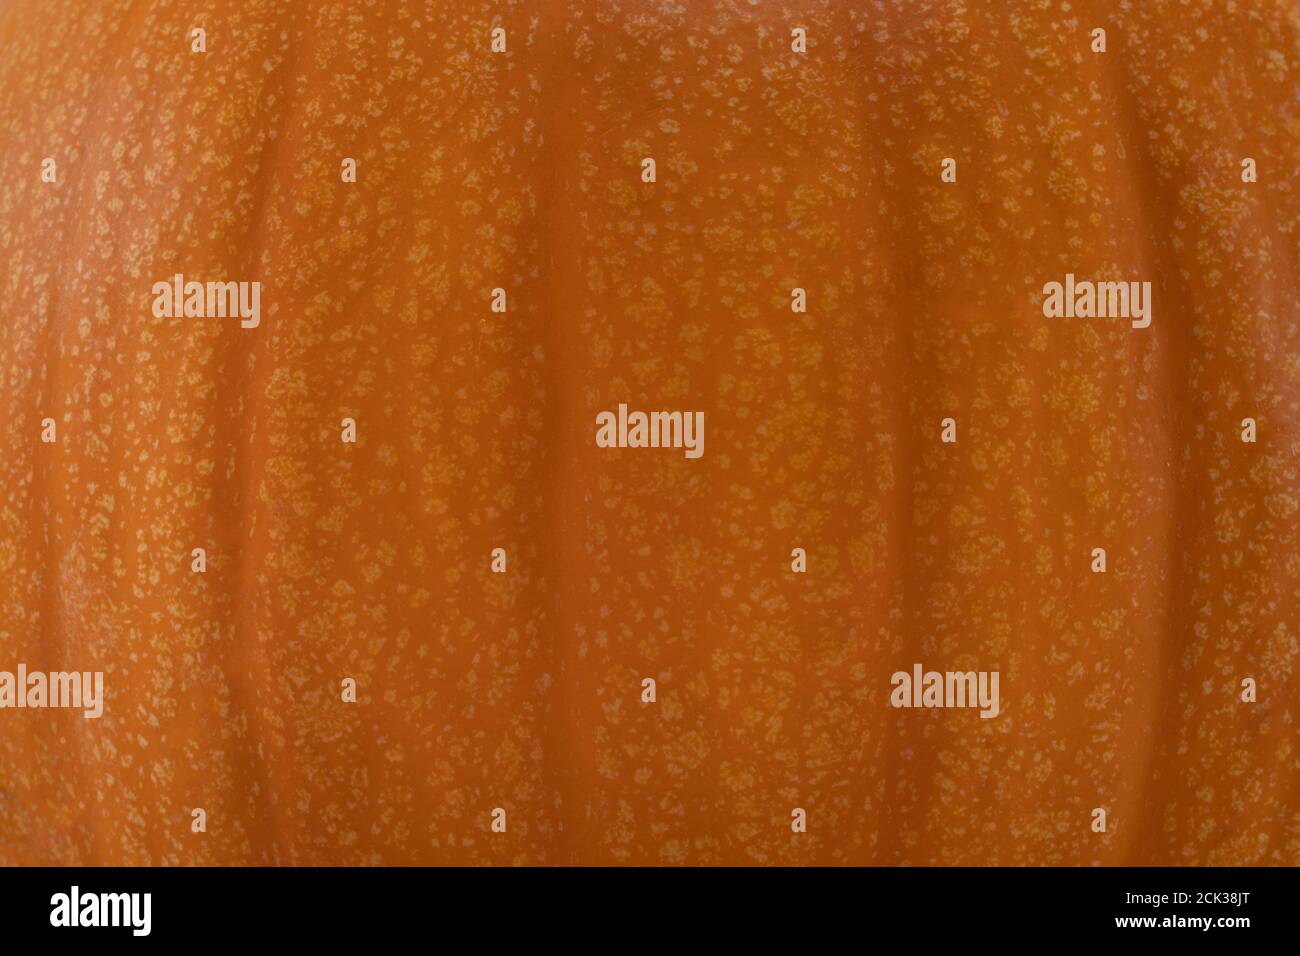 Close up shot of a pumpkin texture background. Stock Photo